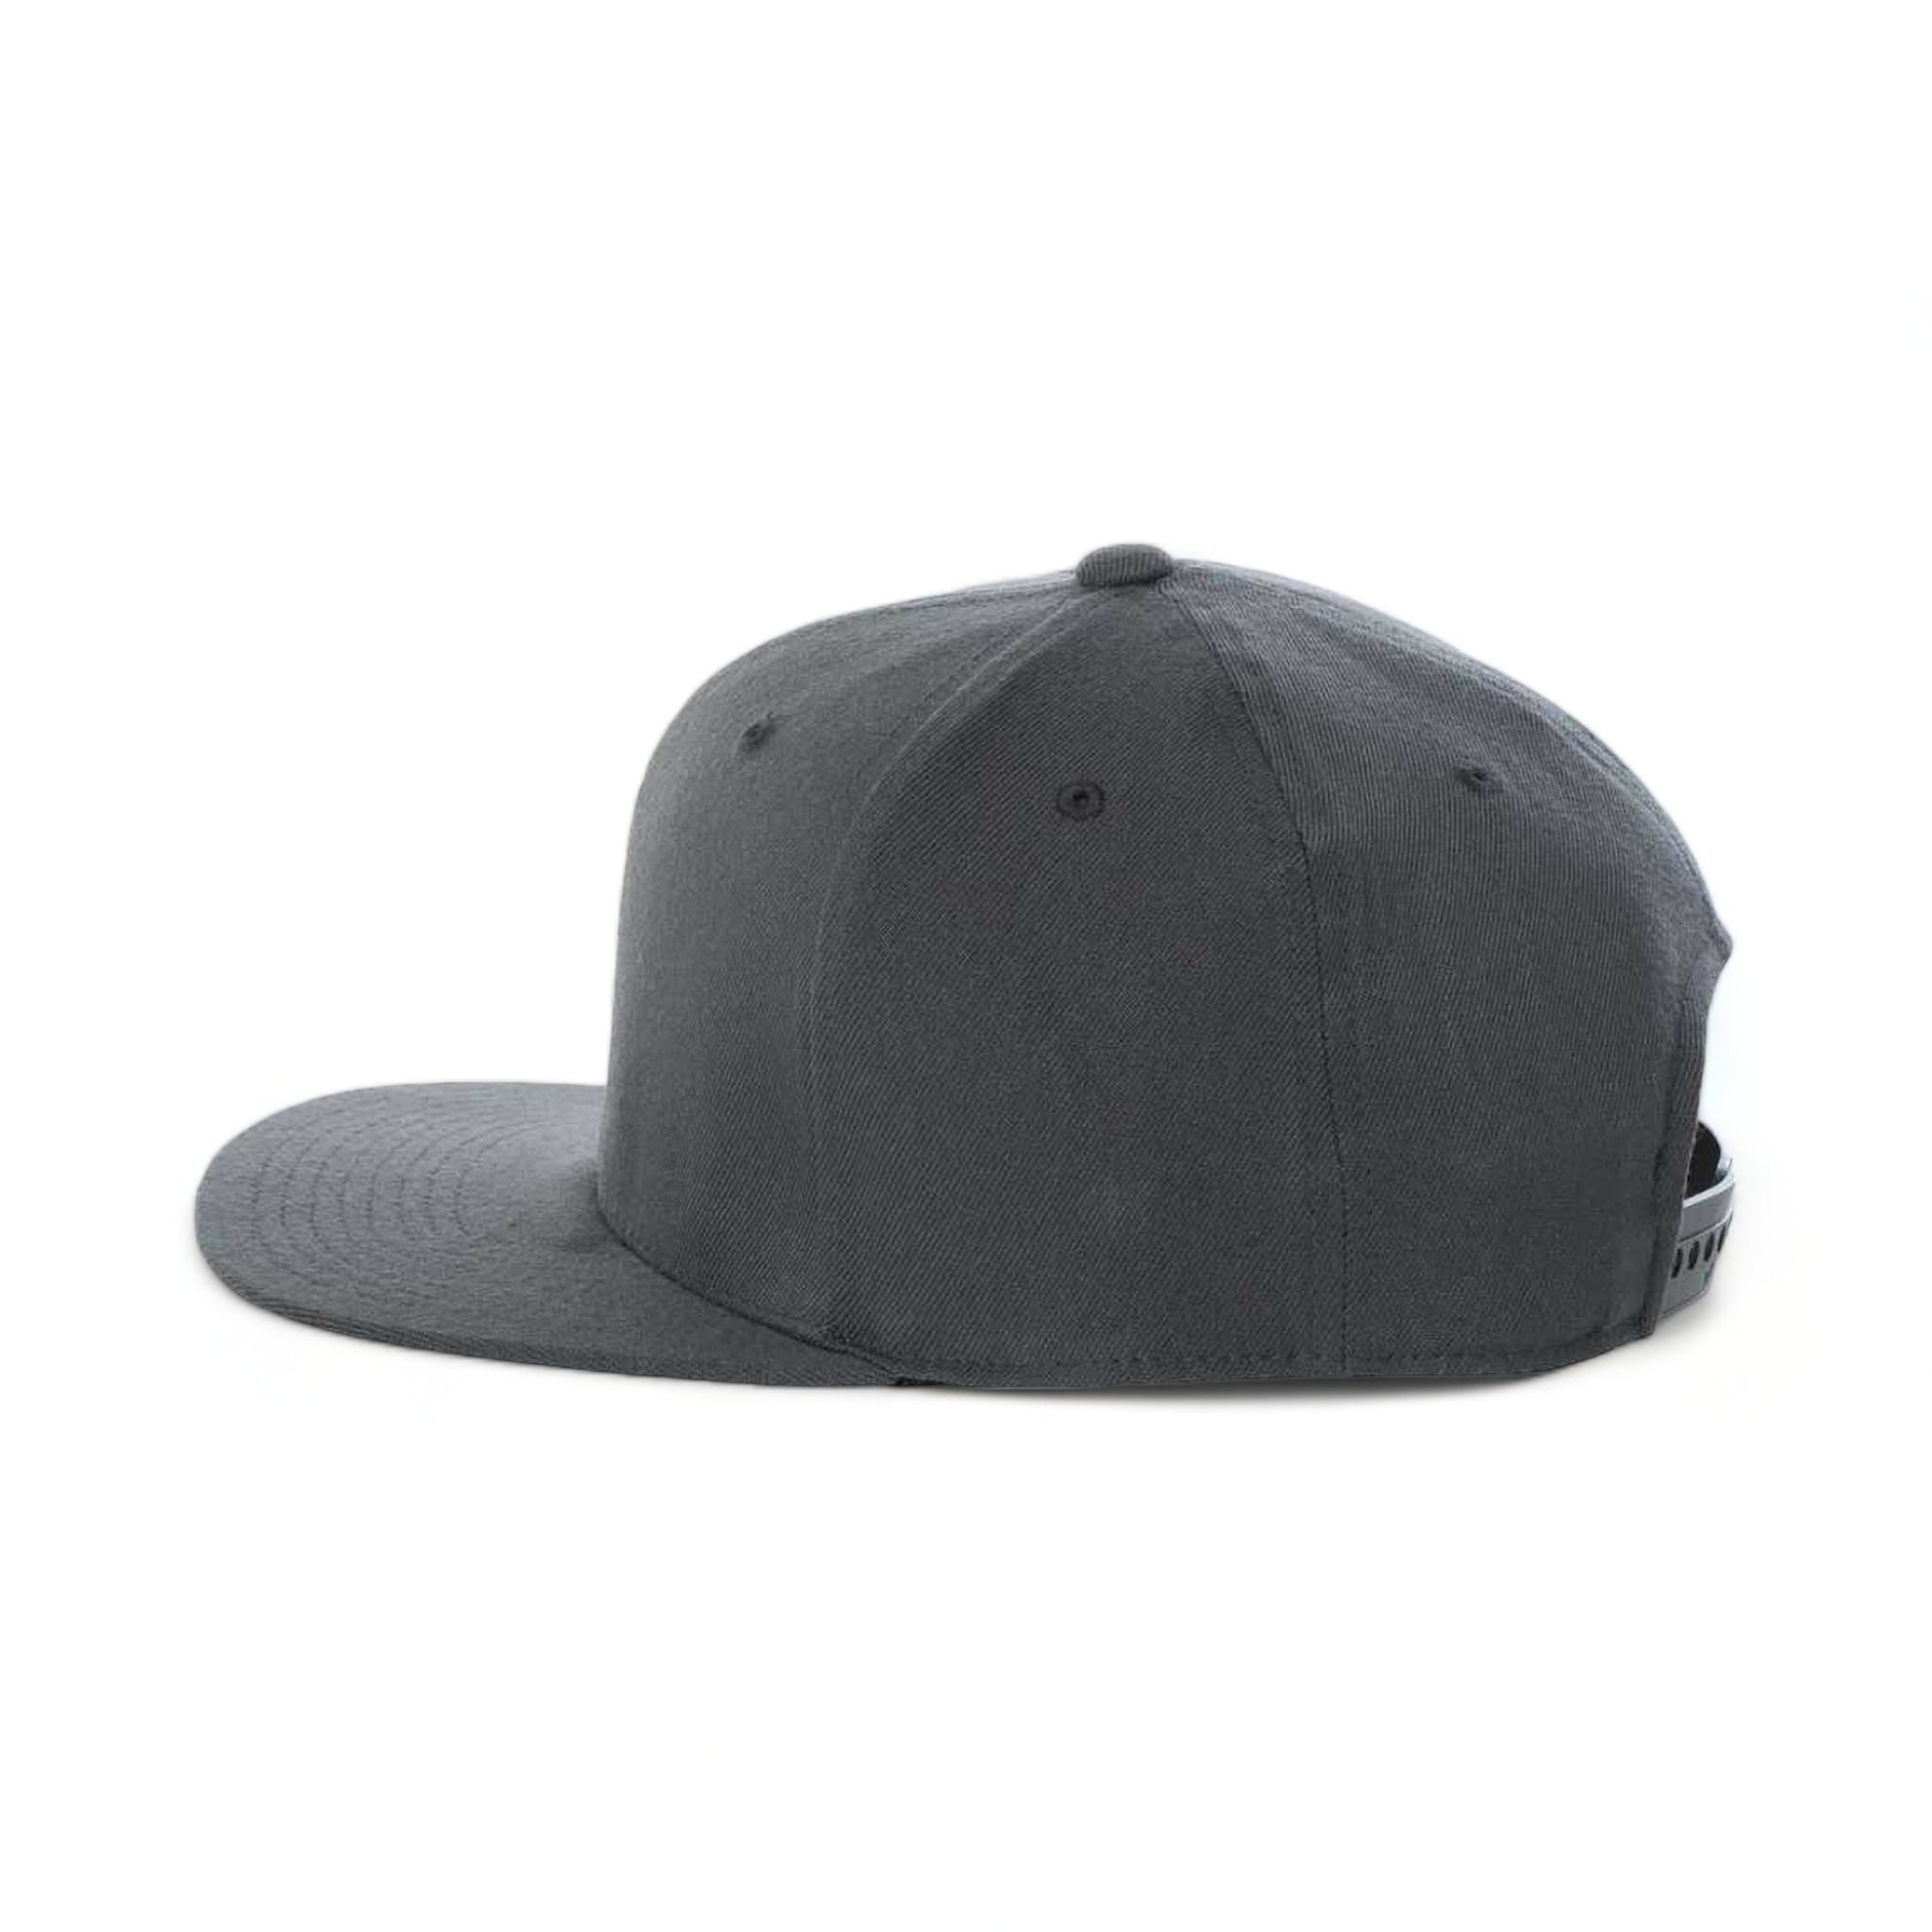 Side view of Flexfit 110F custom hat in dark grey